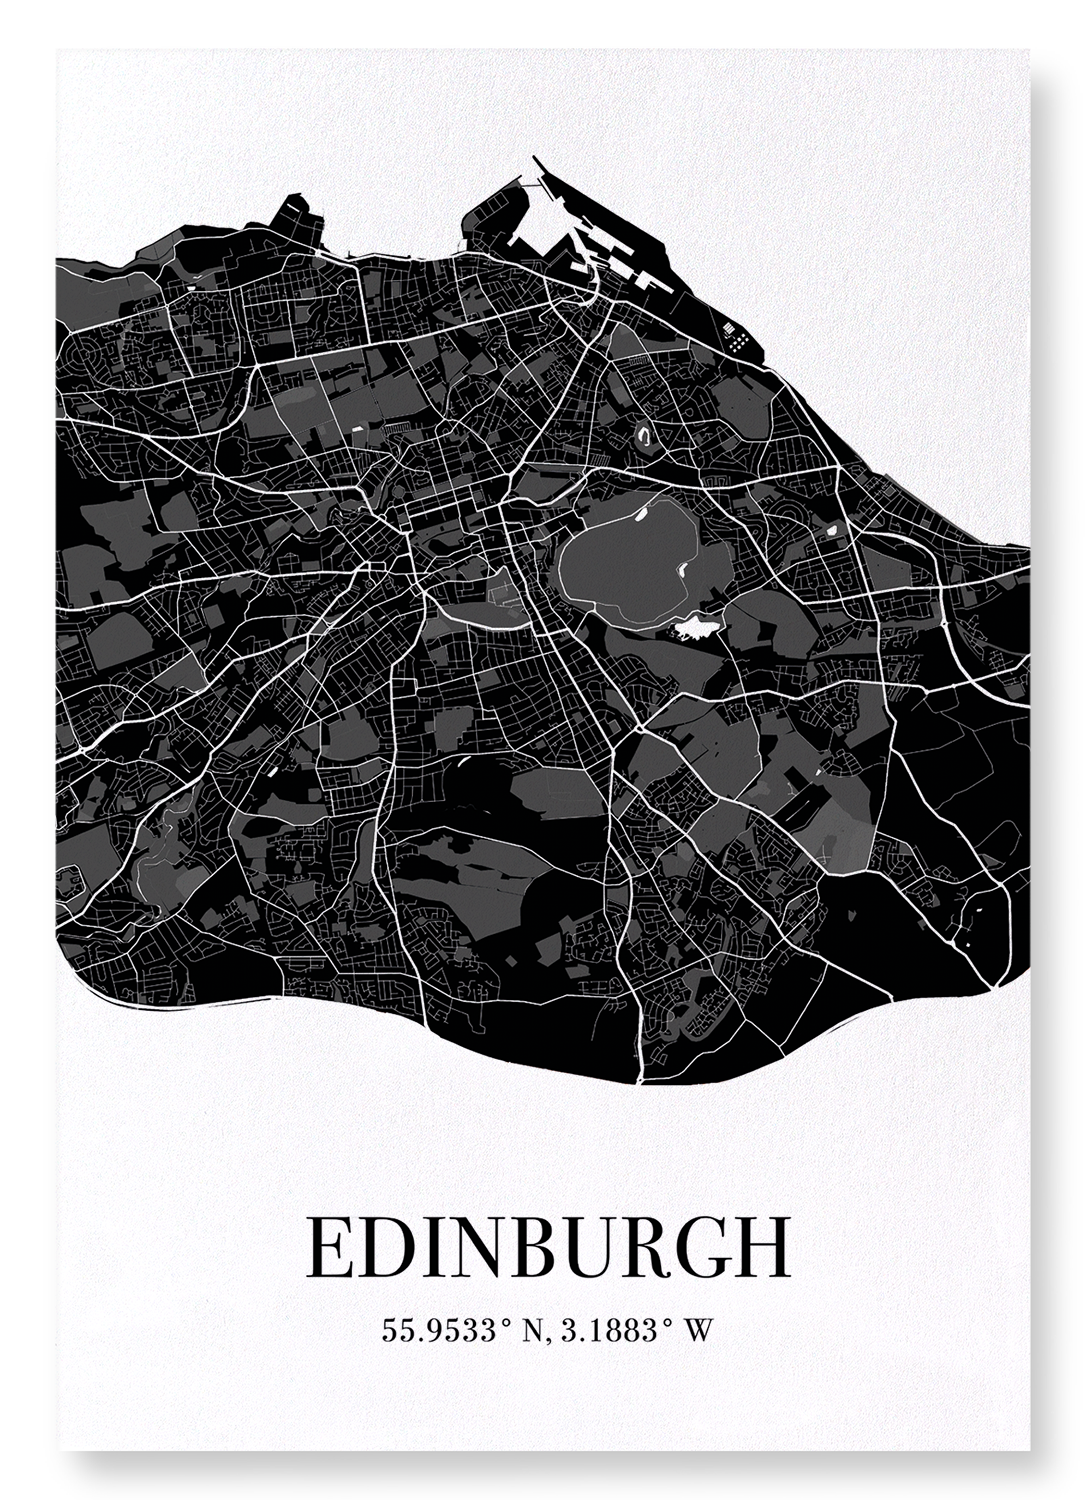 EDINBURGH CUTOUT: Map Cutout Art Print